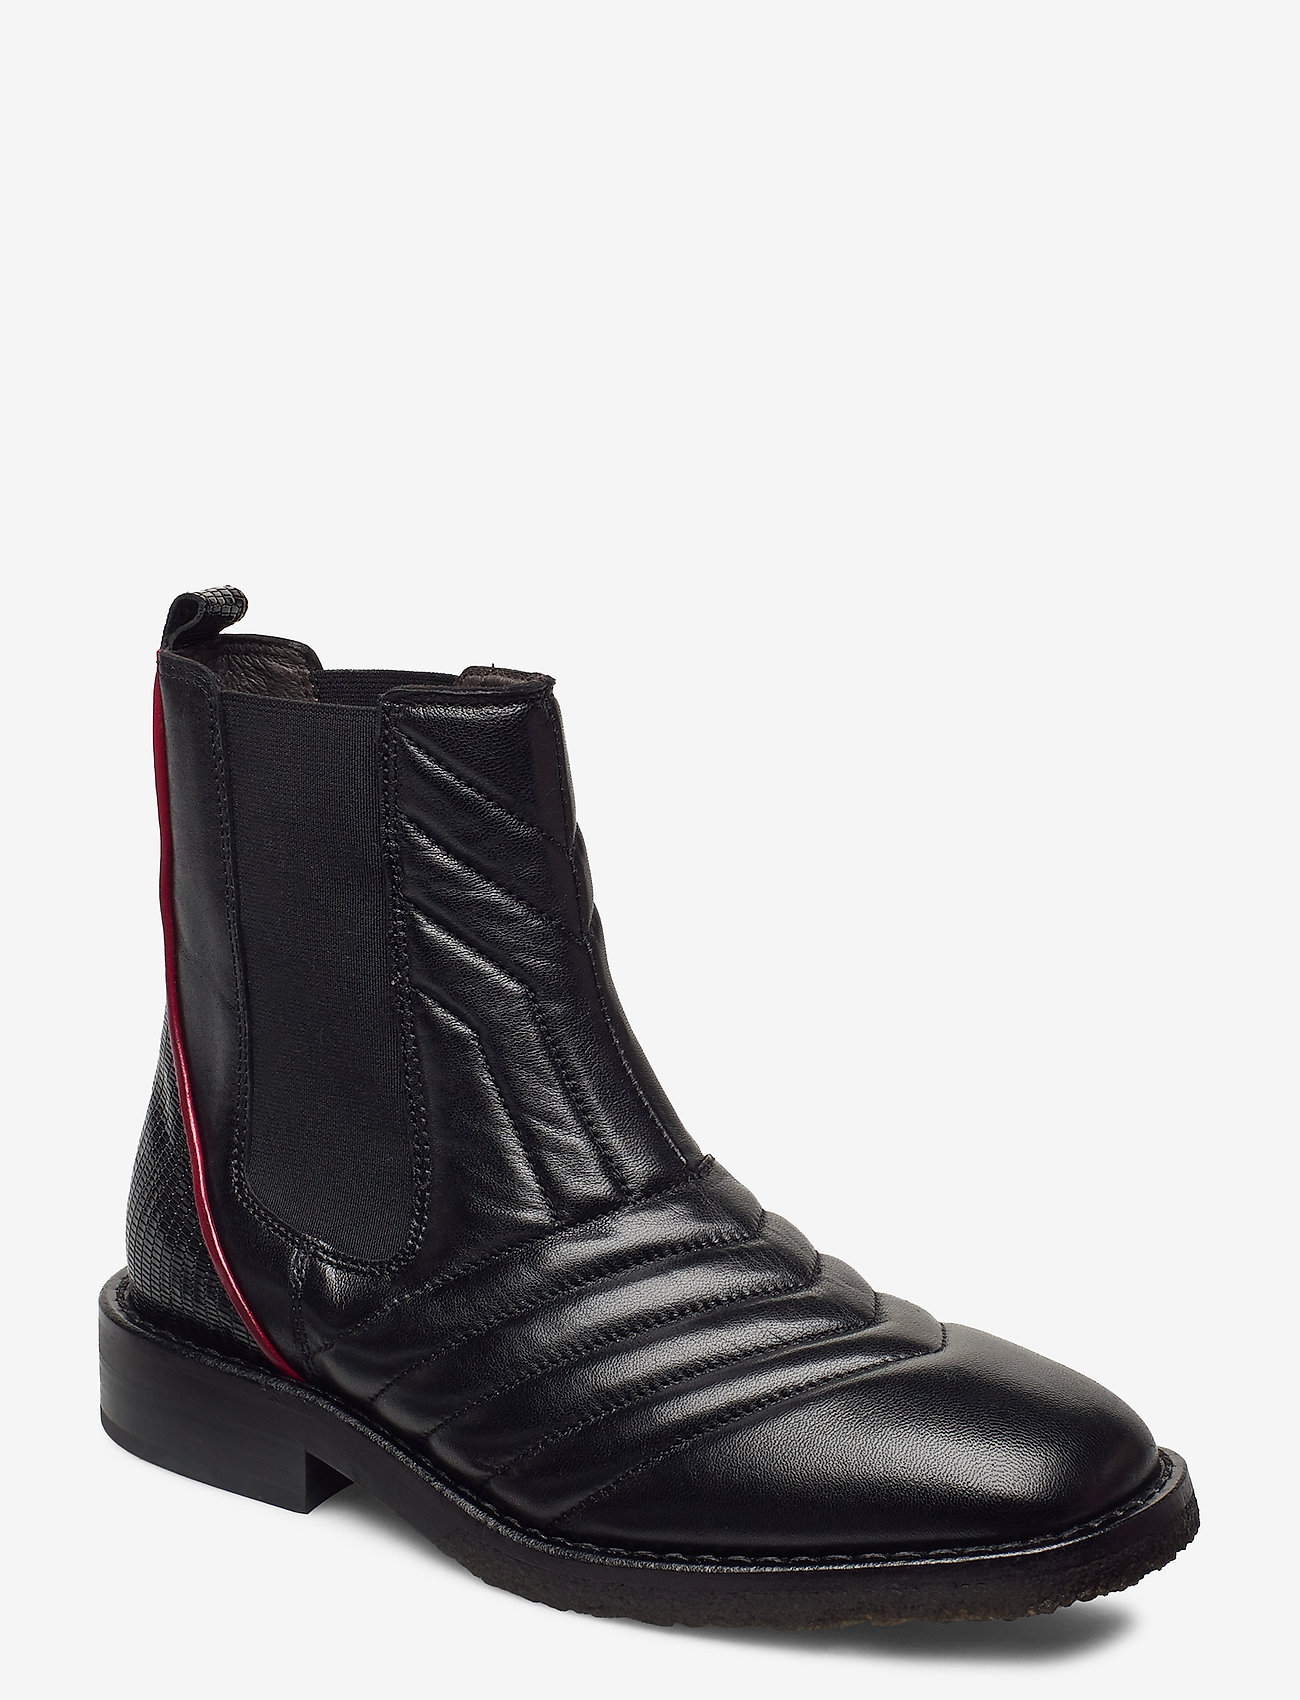 Billi Bi Boots 4843 - Chelsea boots |